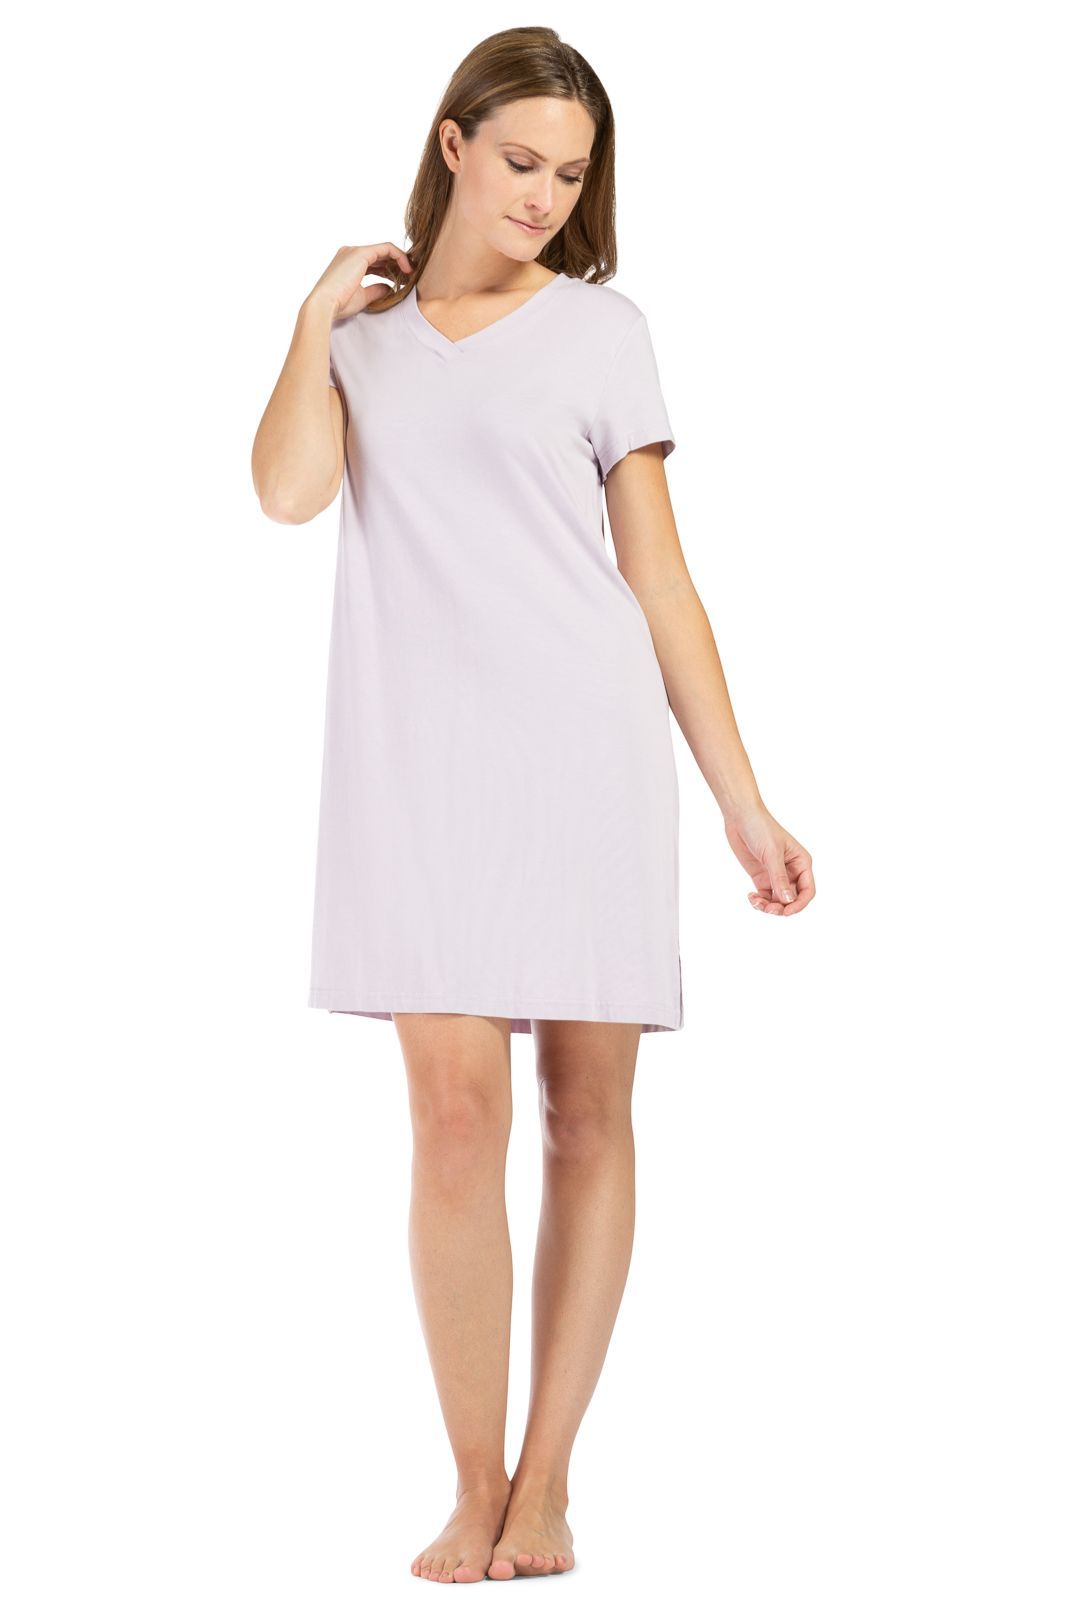 Women's Sleepwear Cotton Sleep Tee Short Sleeves Modal Built in